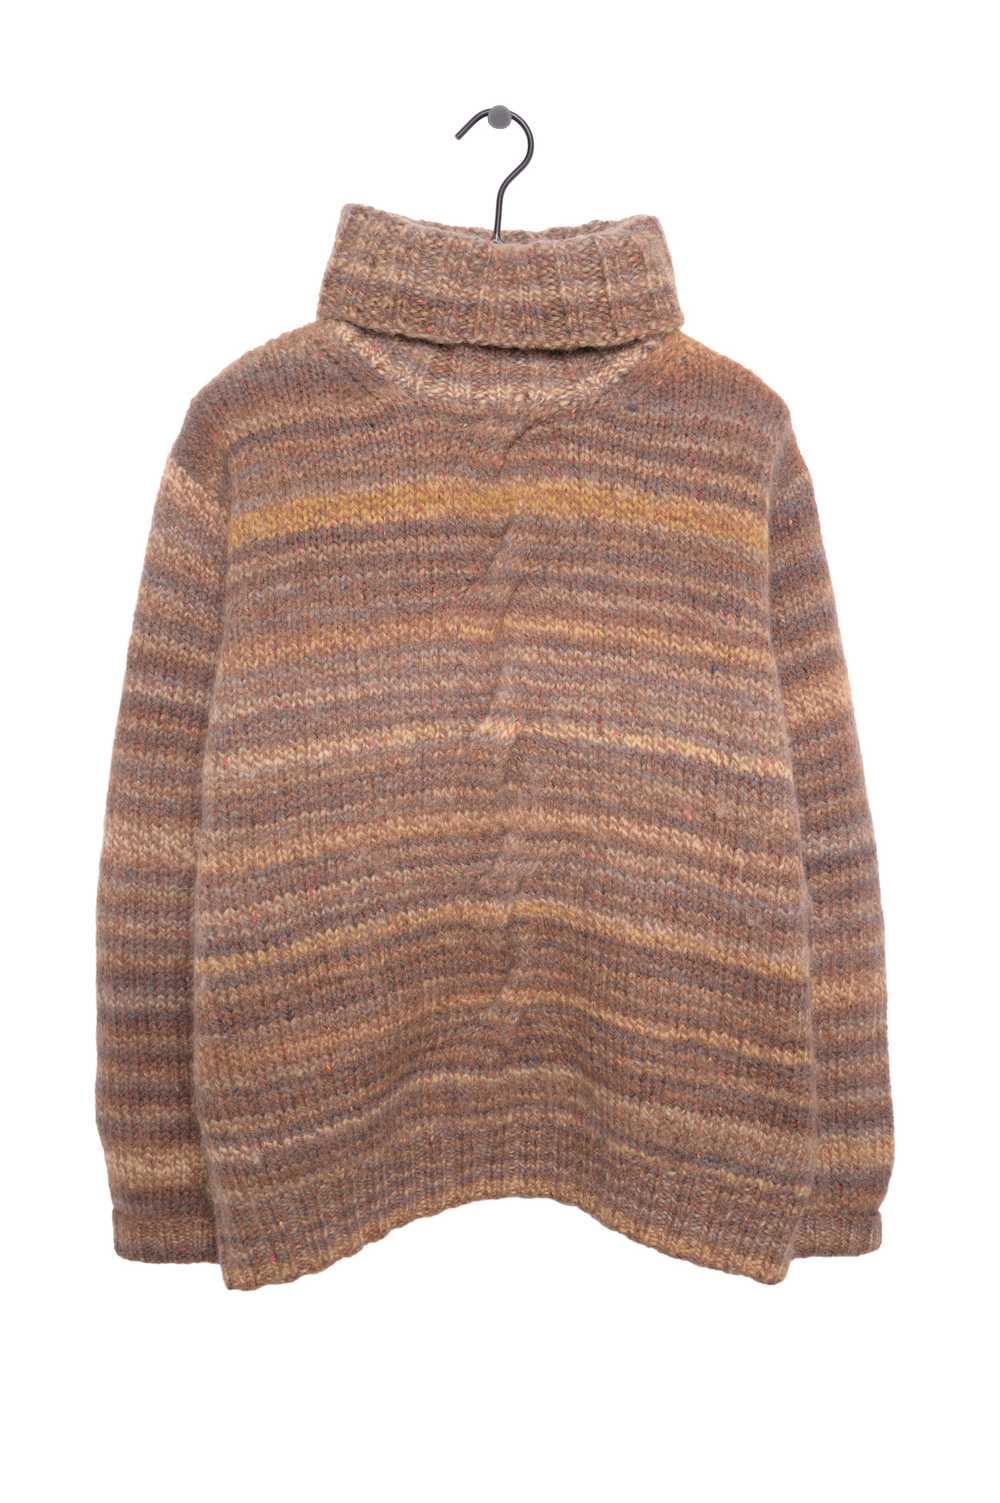 Brown Turtleneck Sweater - image 1